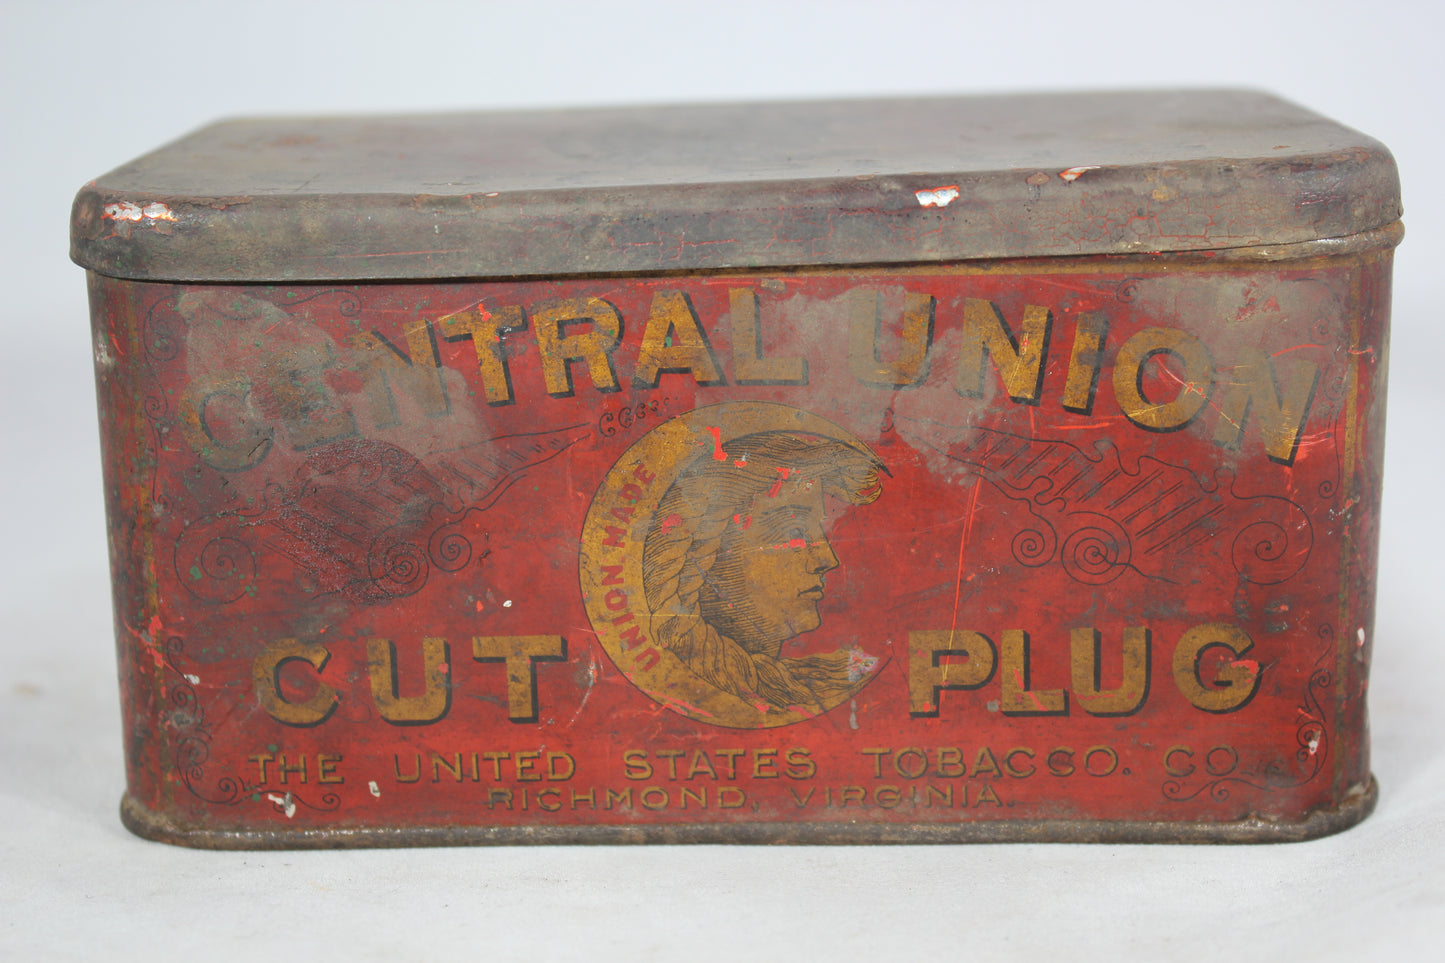 Central Union Cut Plug Tobacco Tin Can